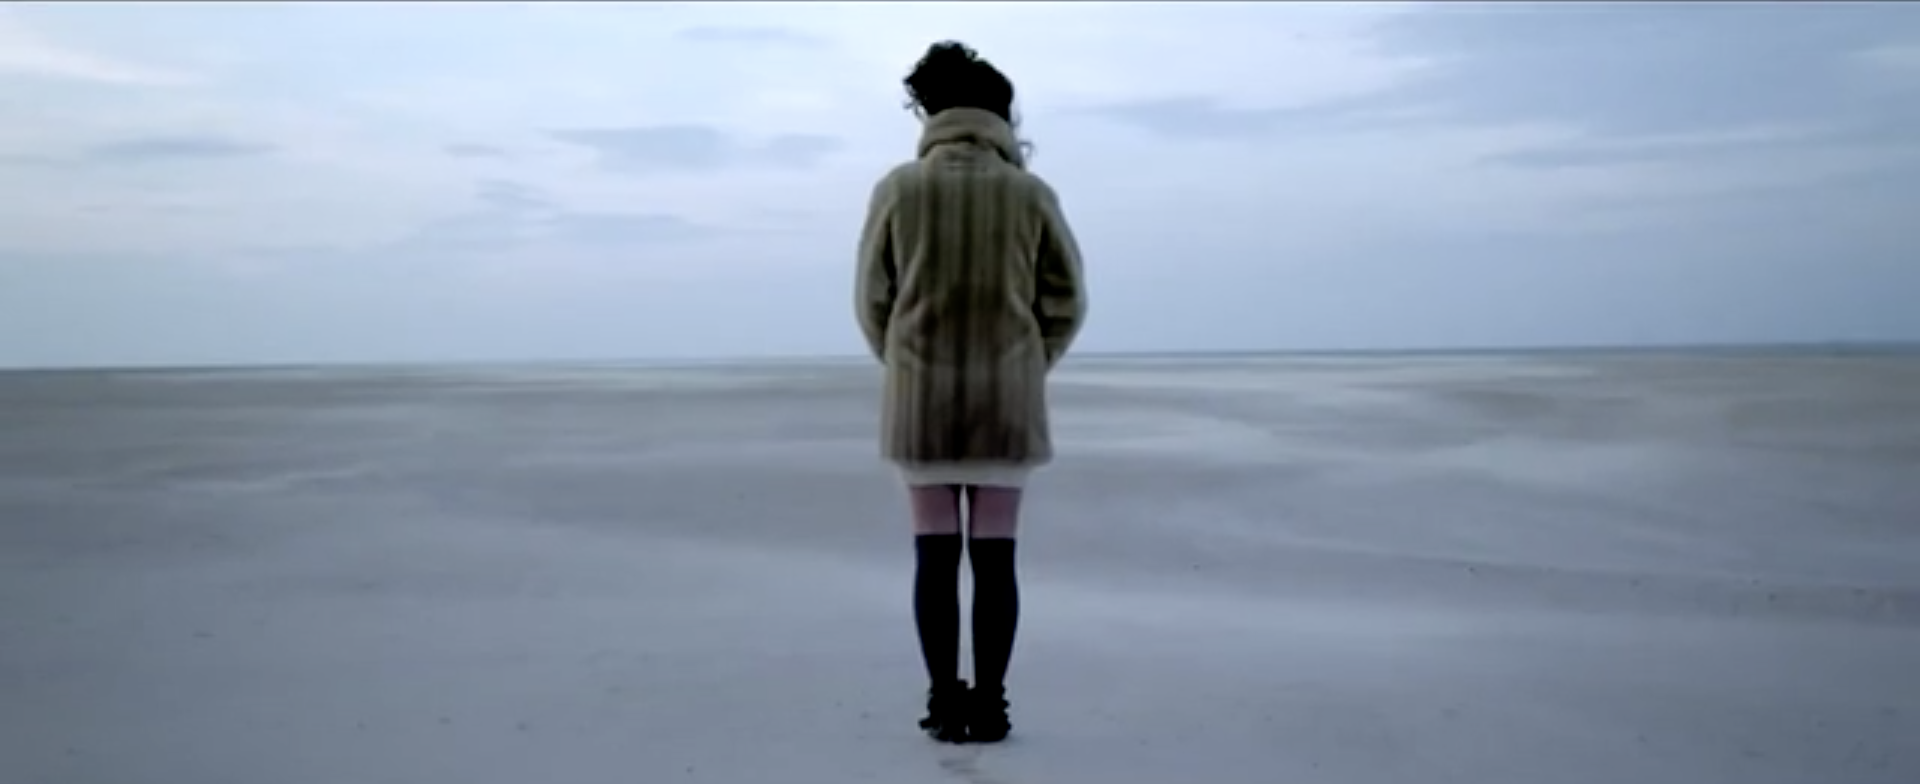 Female Singer In Fur Coat Standing On Sandy Beach With Ocean Background